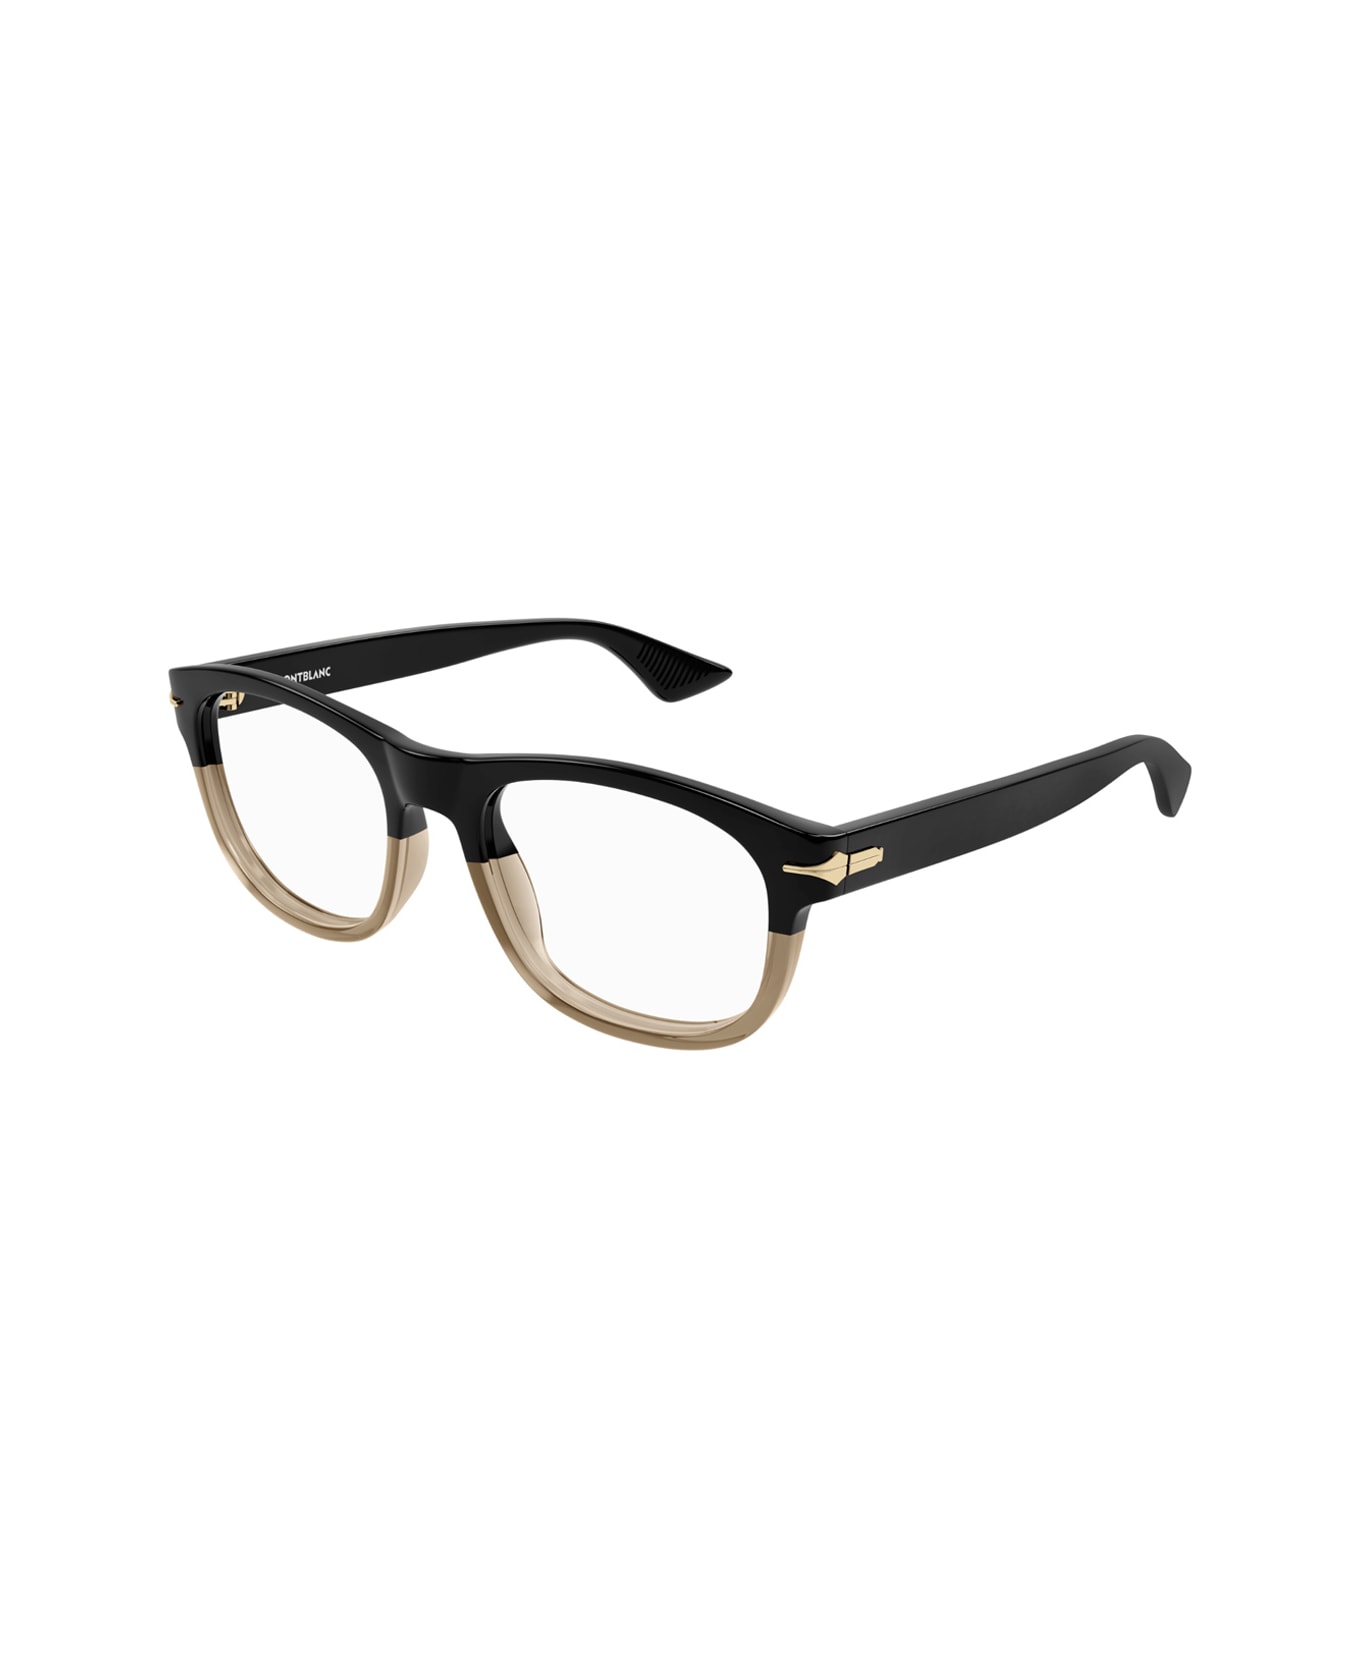 Montblanc Mb0305o 007 Glasses - Nero